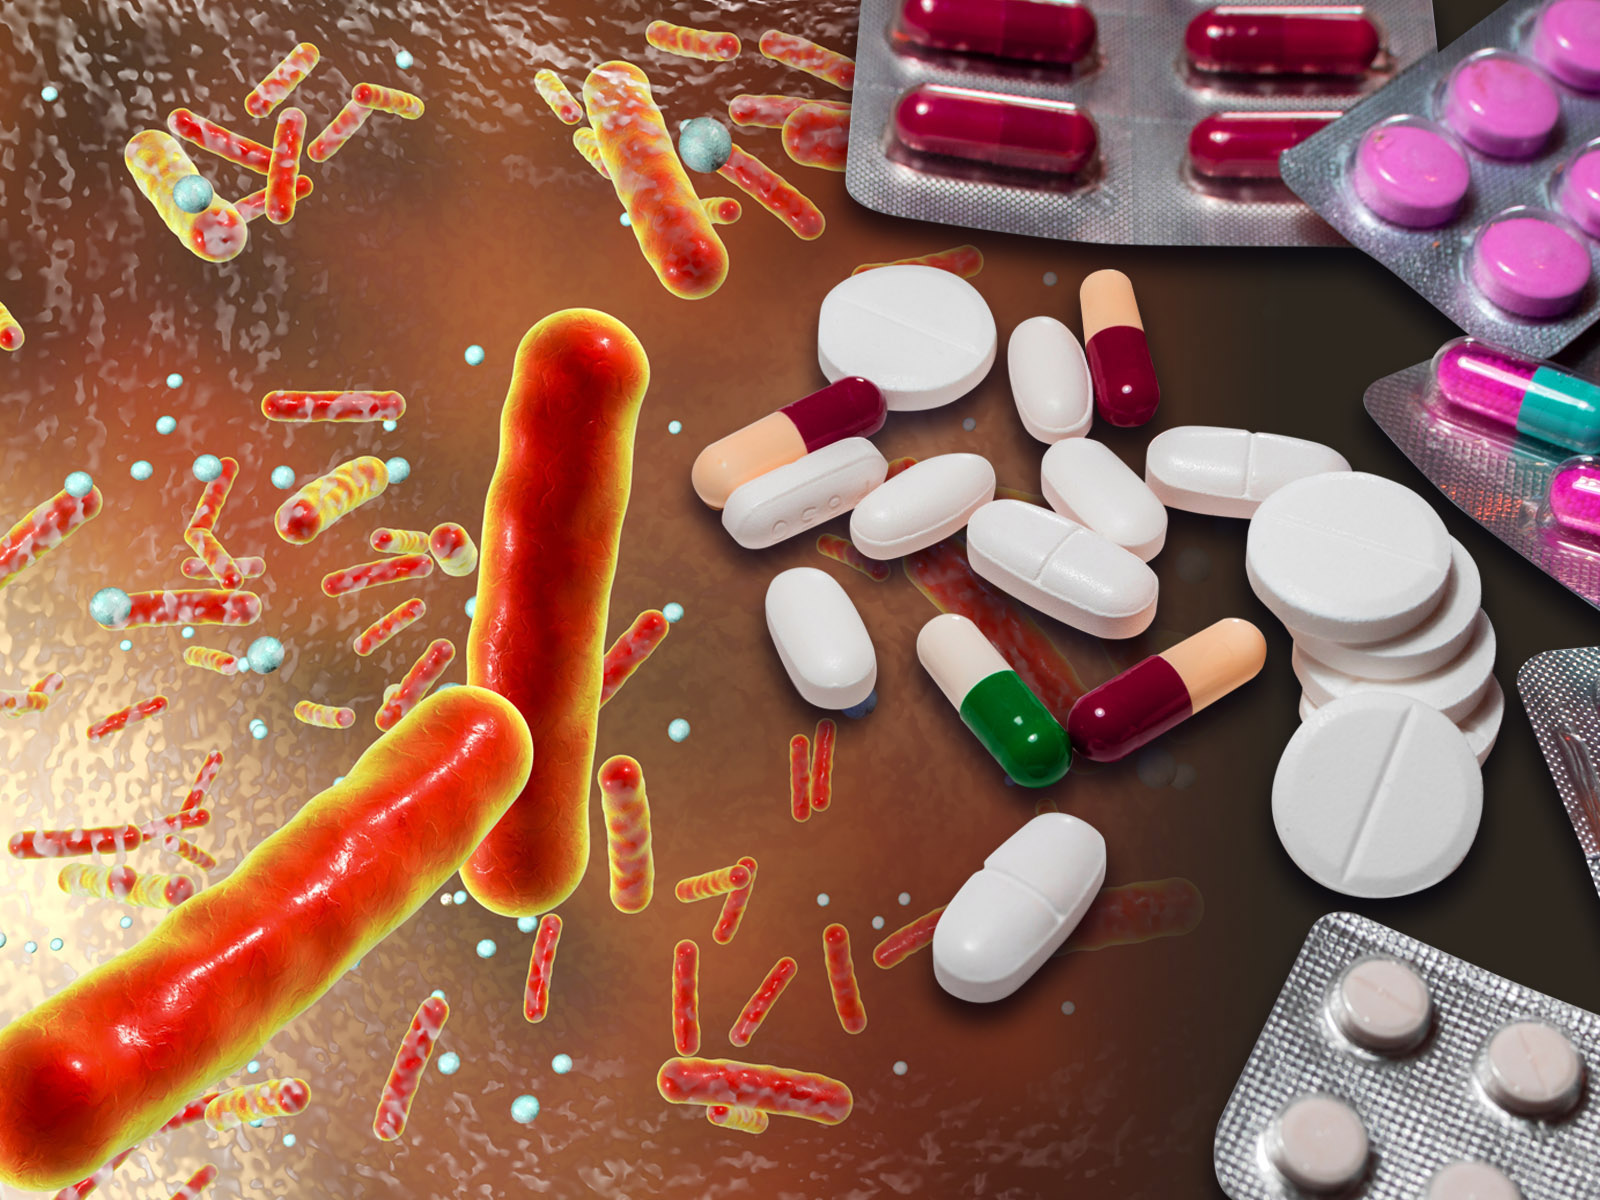 Staying Ahead of Antibiotic Resistance